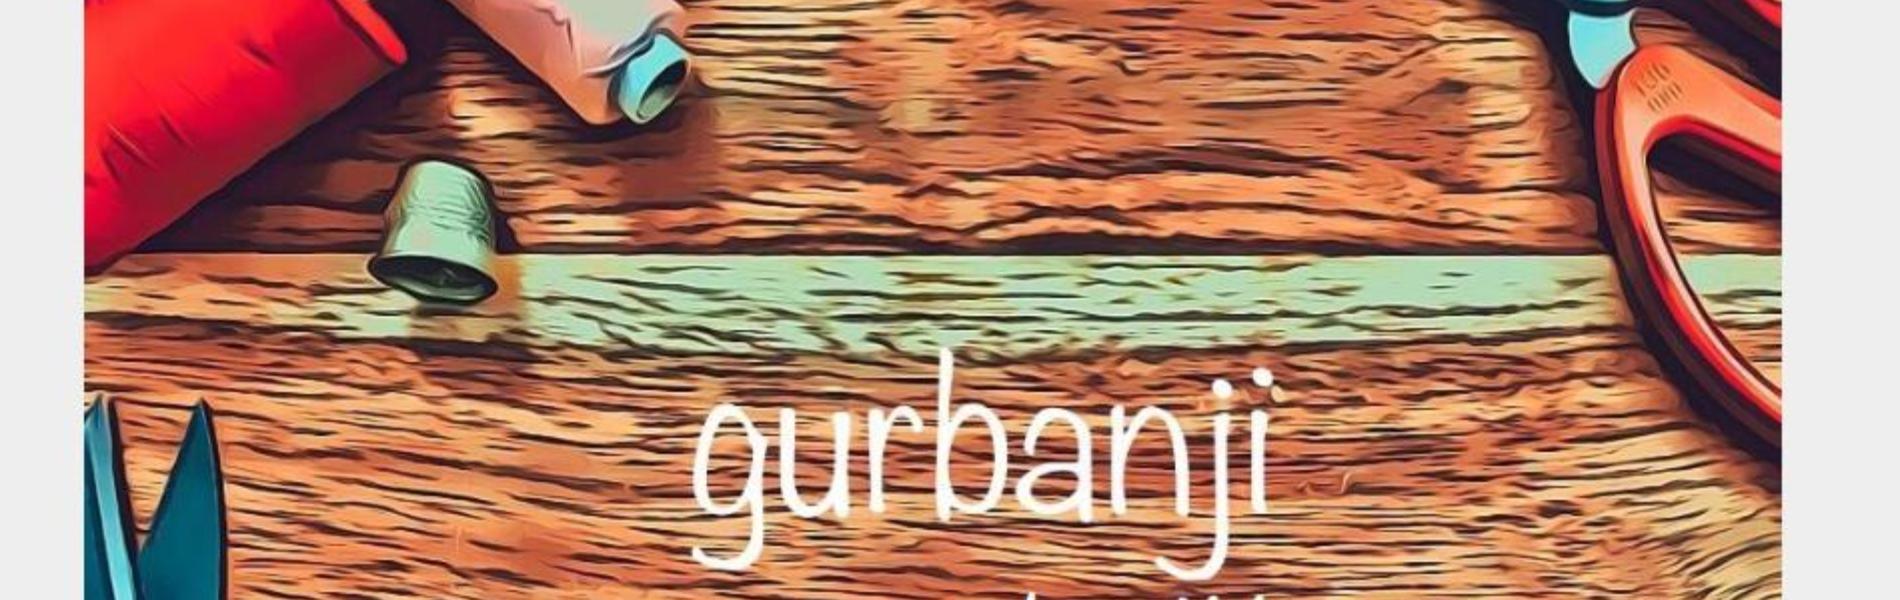 Gurbanji